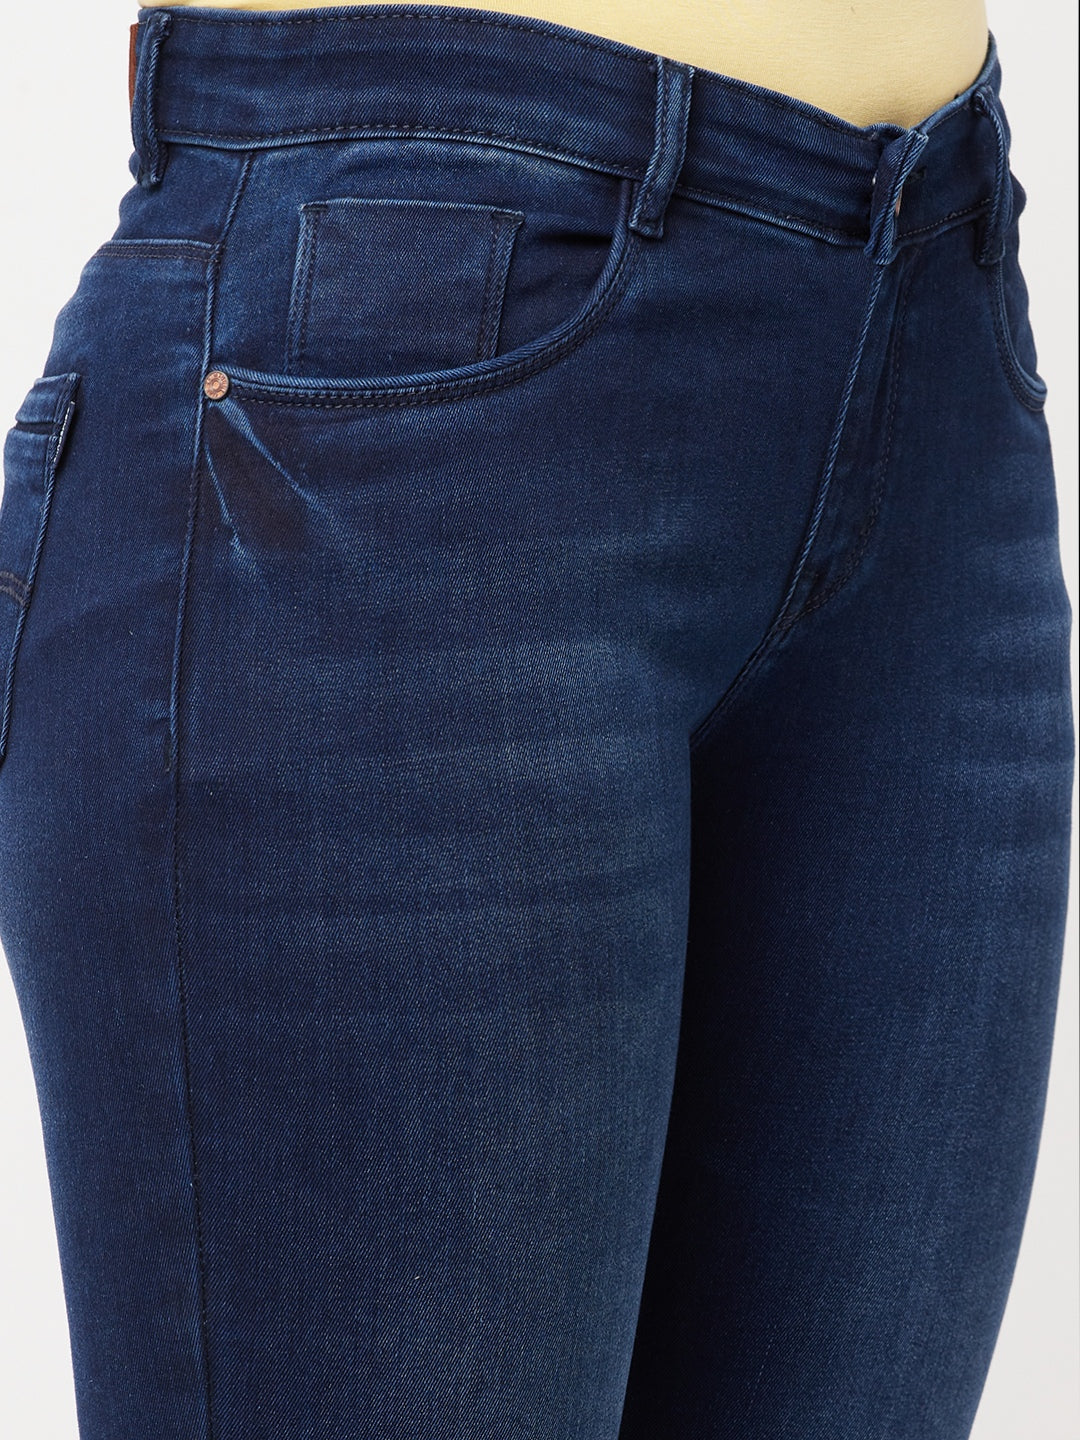 Blue Cropped Jeans - Women Jeans